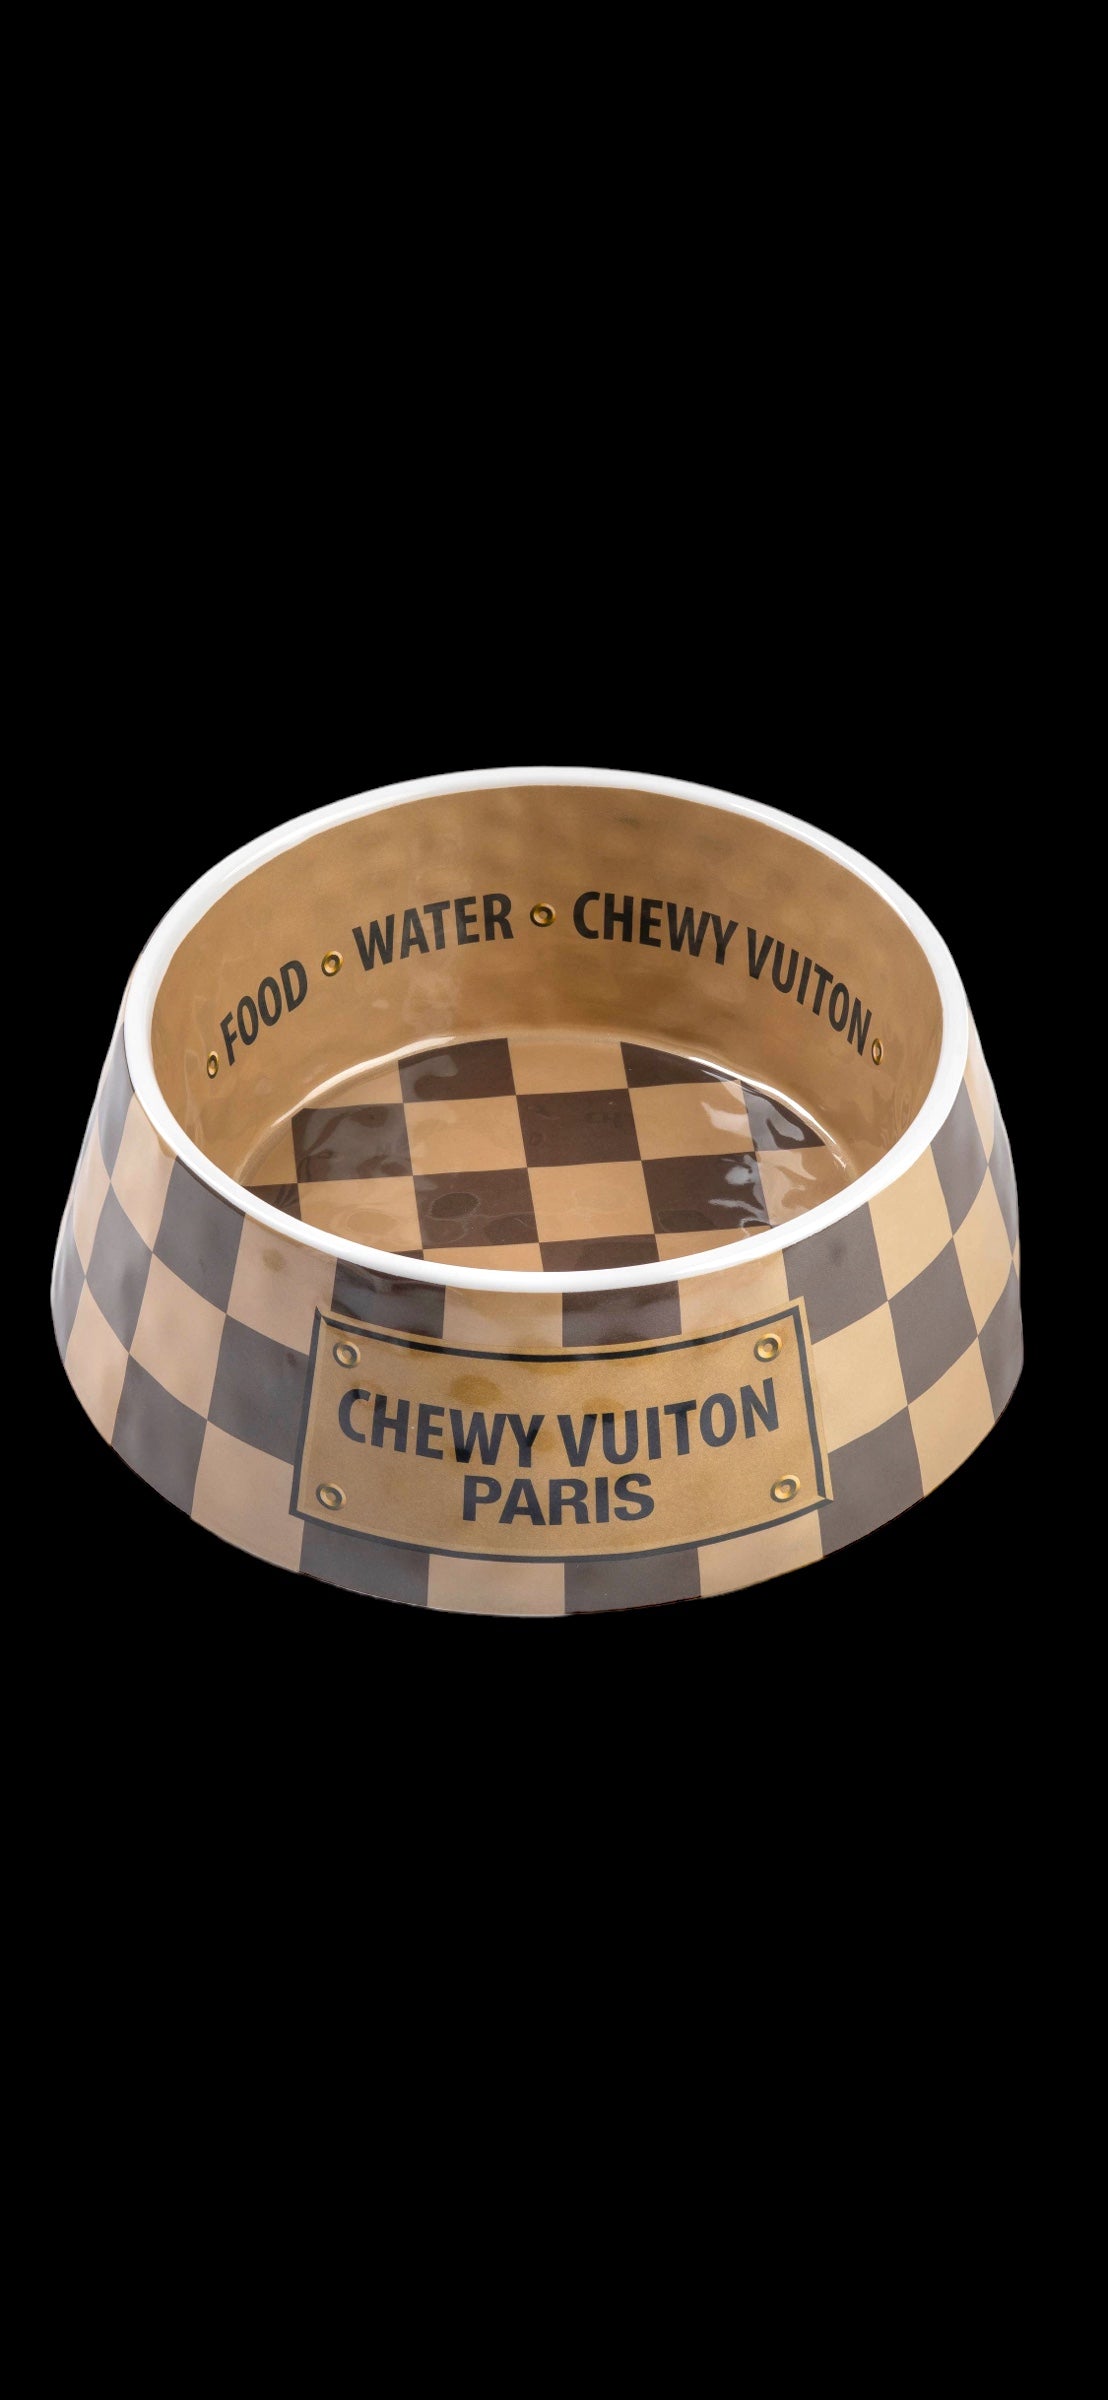 Chewy Vuiton Paris Set